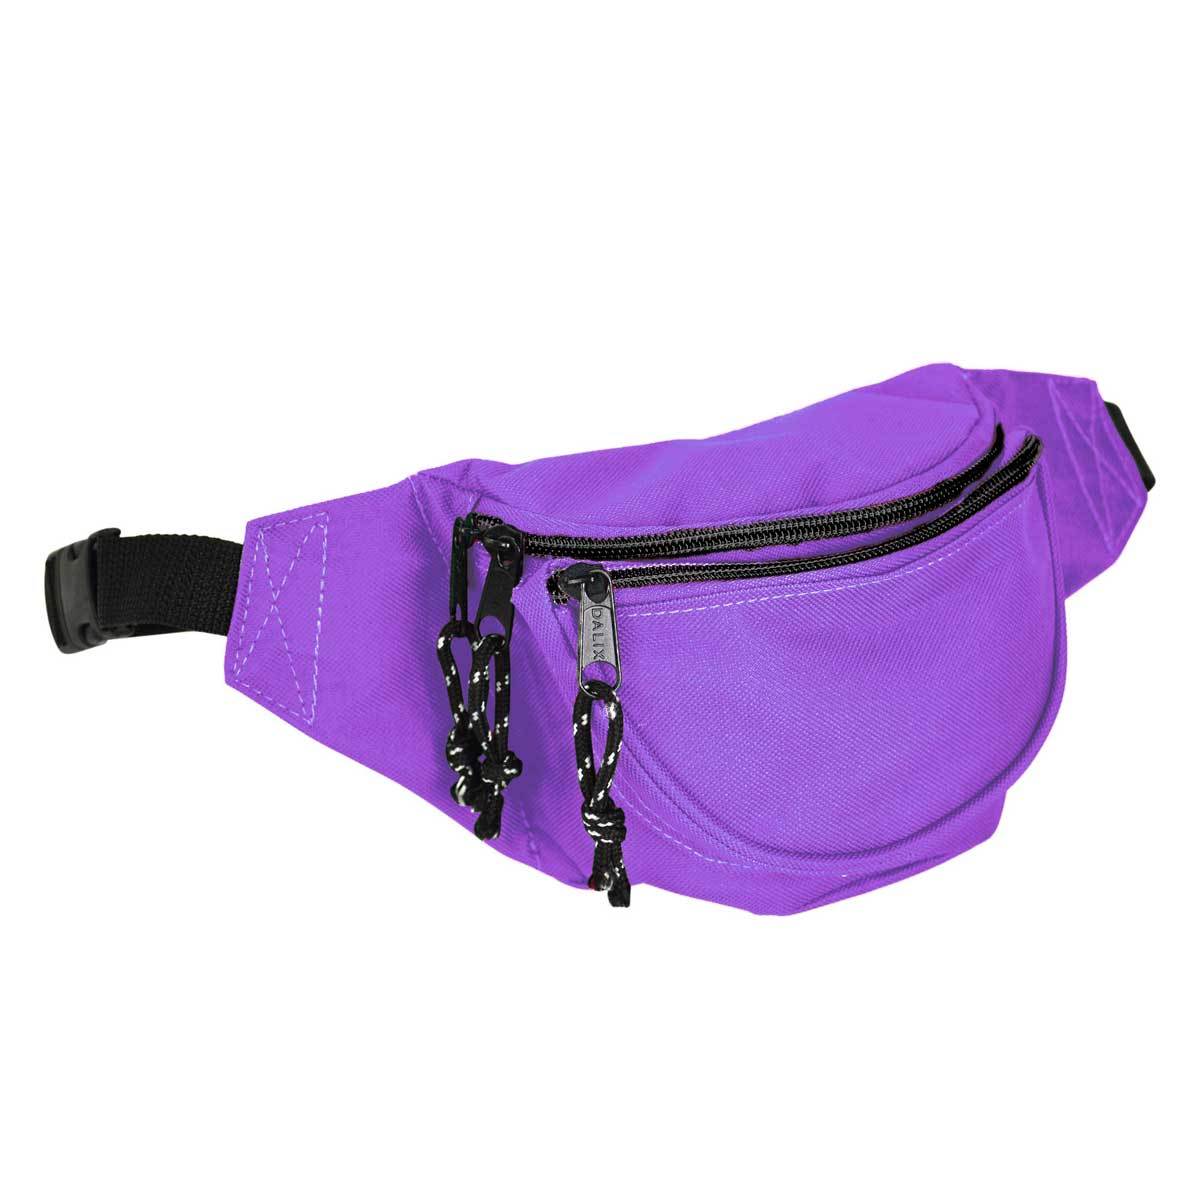 DALIX Fanny Pack w/ 3 Pockets Traveling Concealment Pouch Airport Money Bag FP-001 Fanny Packs DALIX Purple 